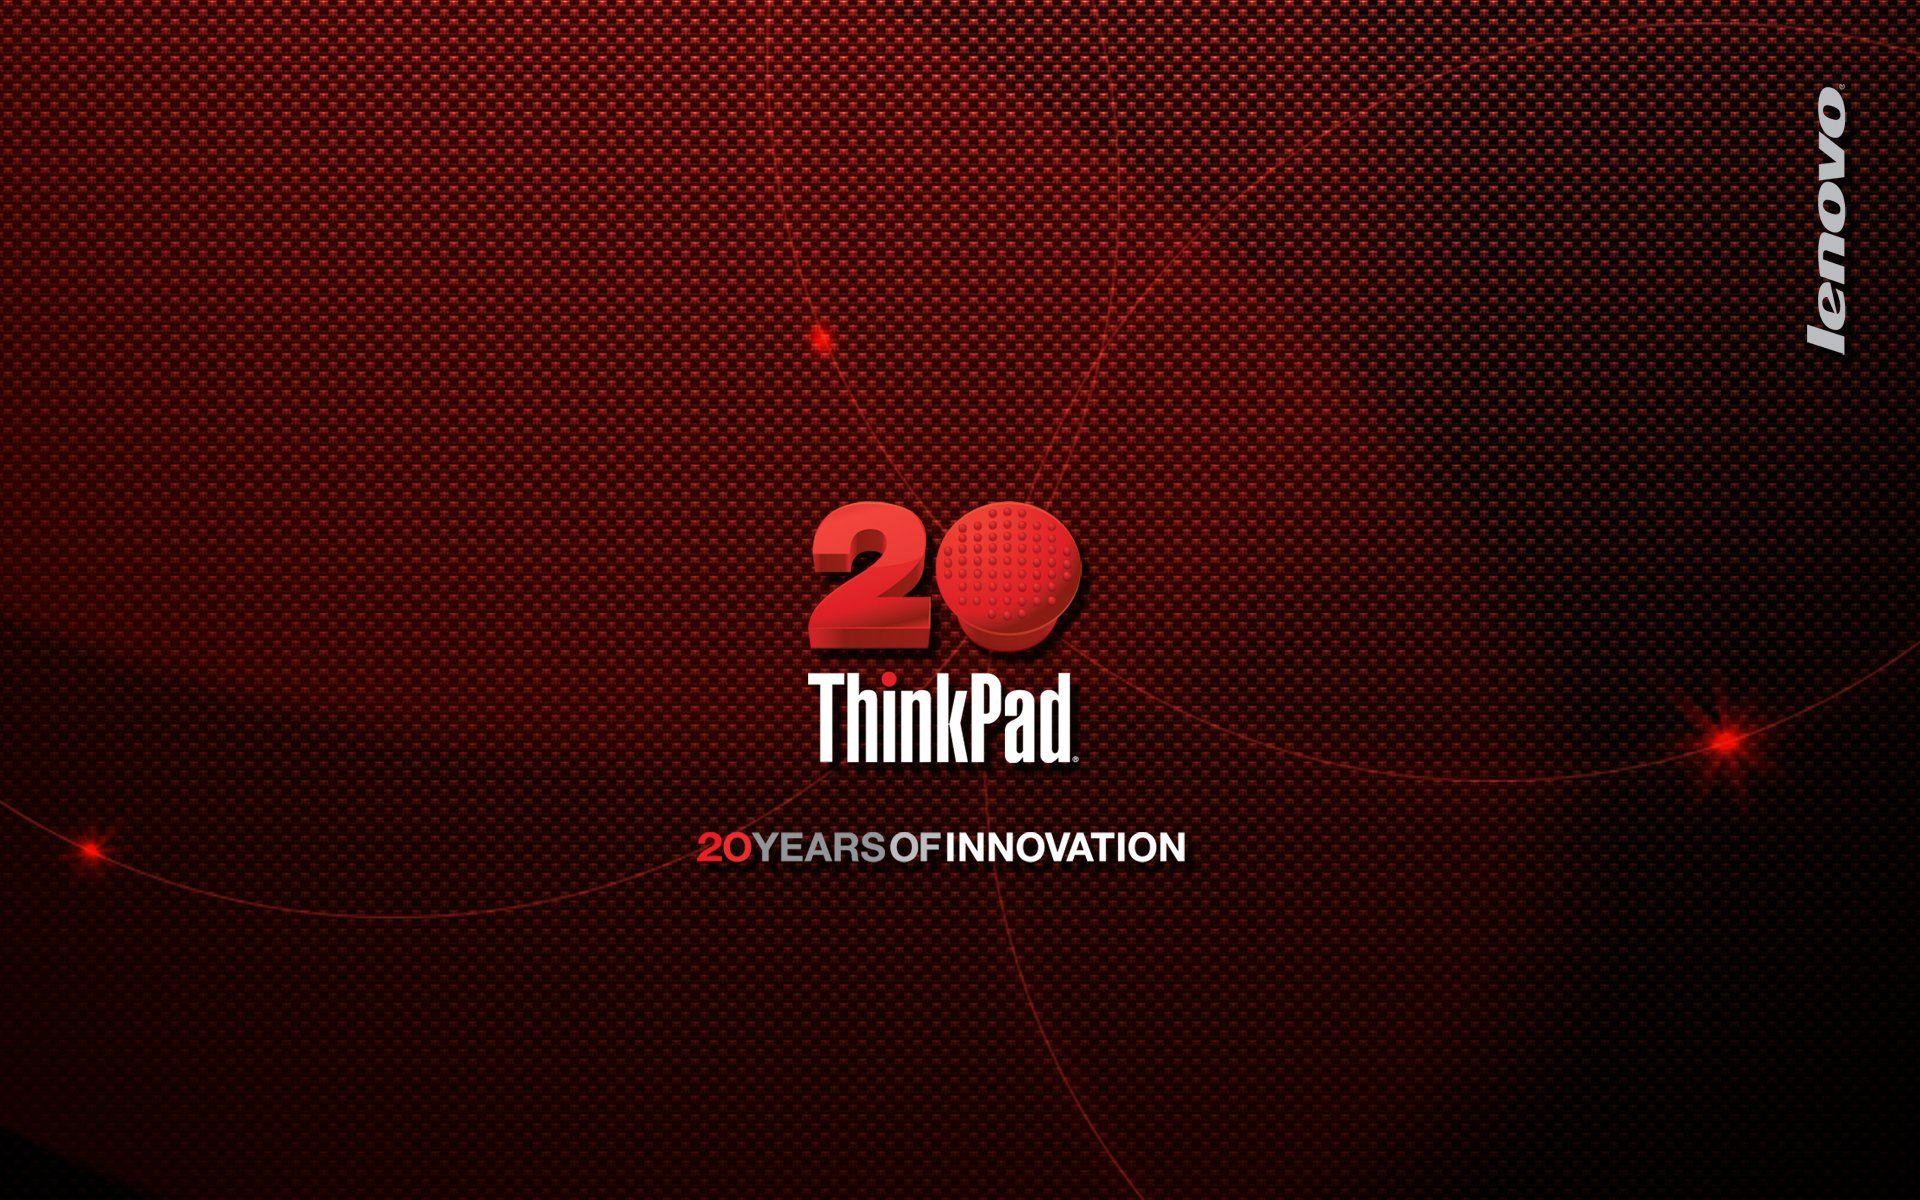 Free Download Lenovo Thinkpad Background